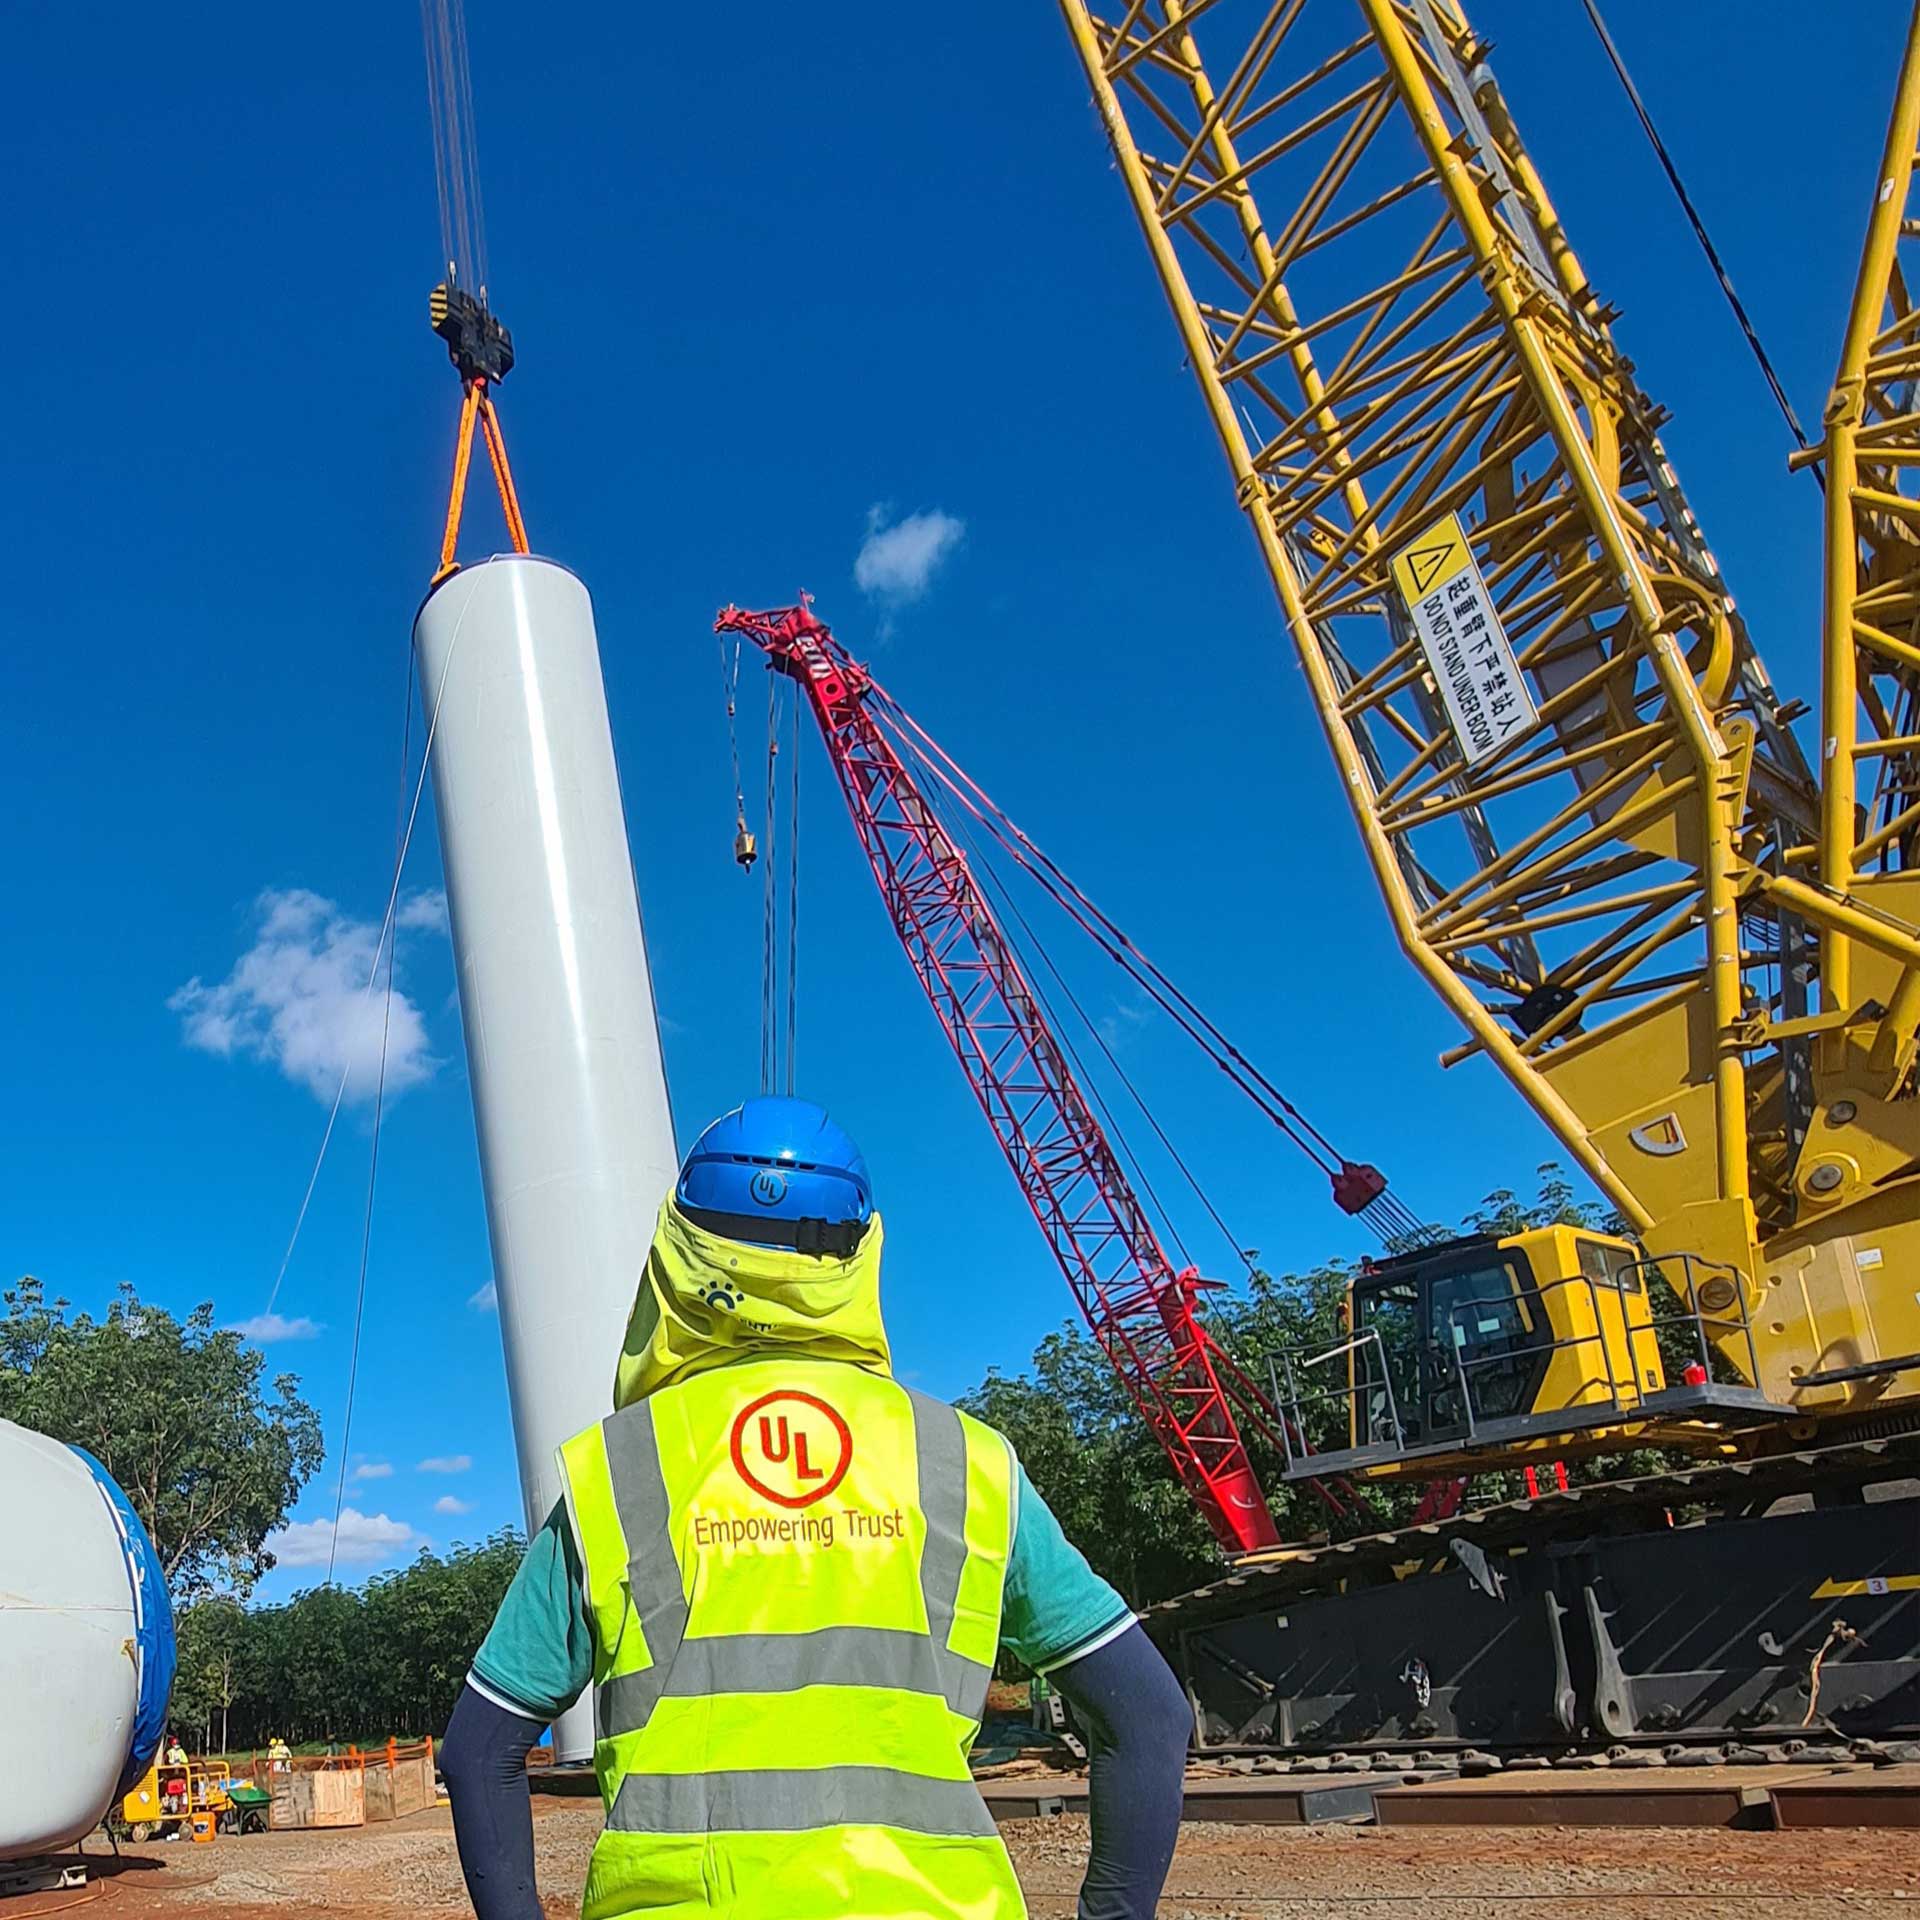 UL employee supervising set up of wind turbine